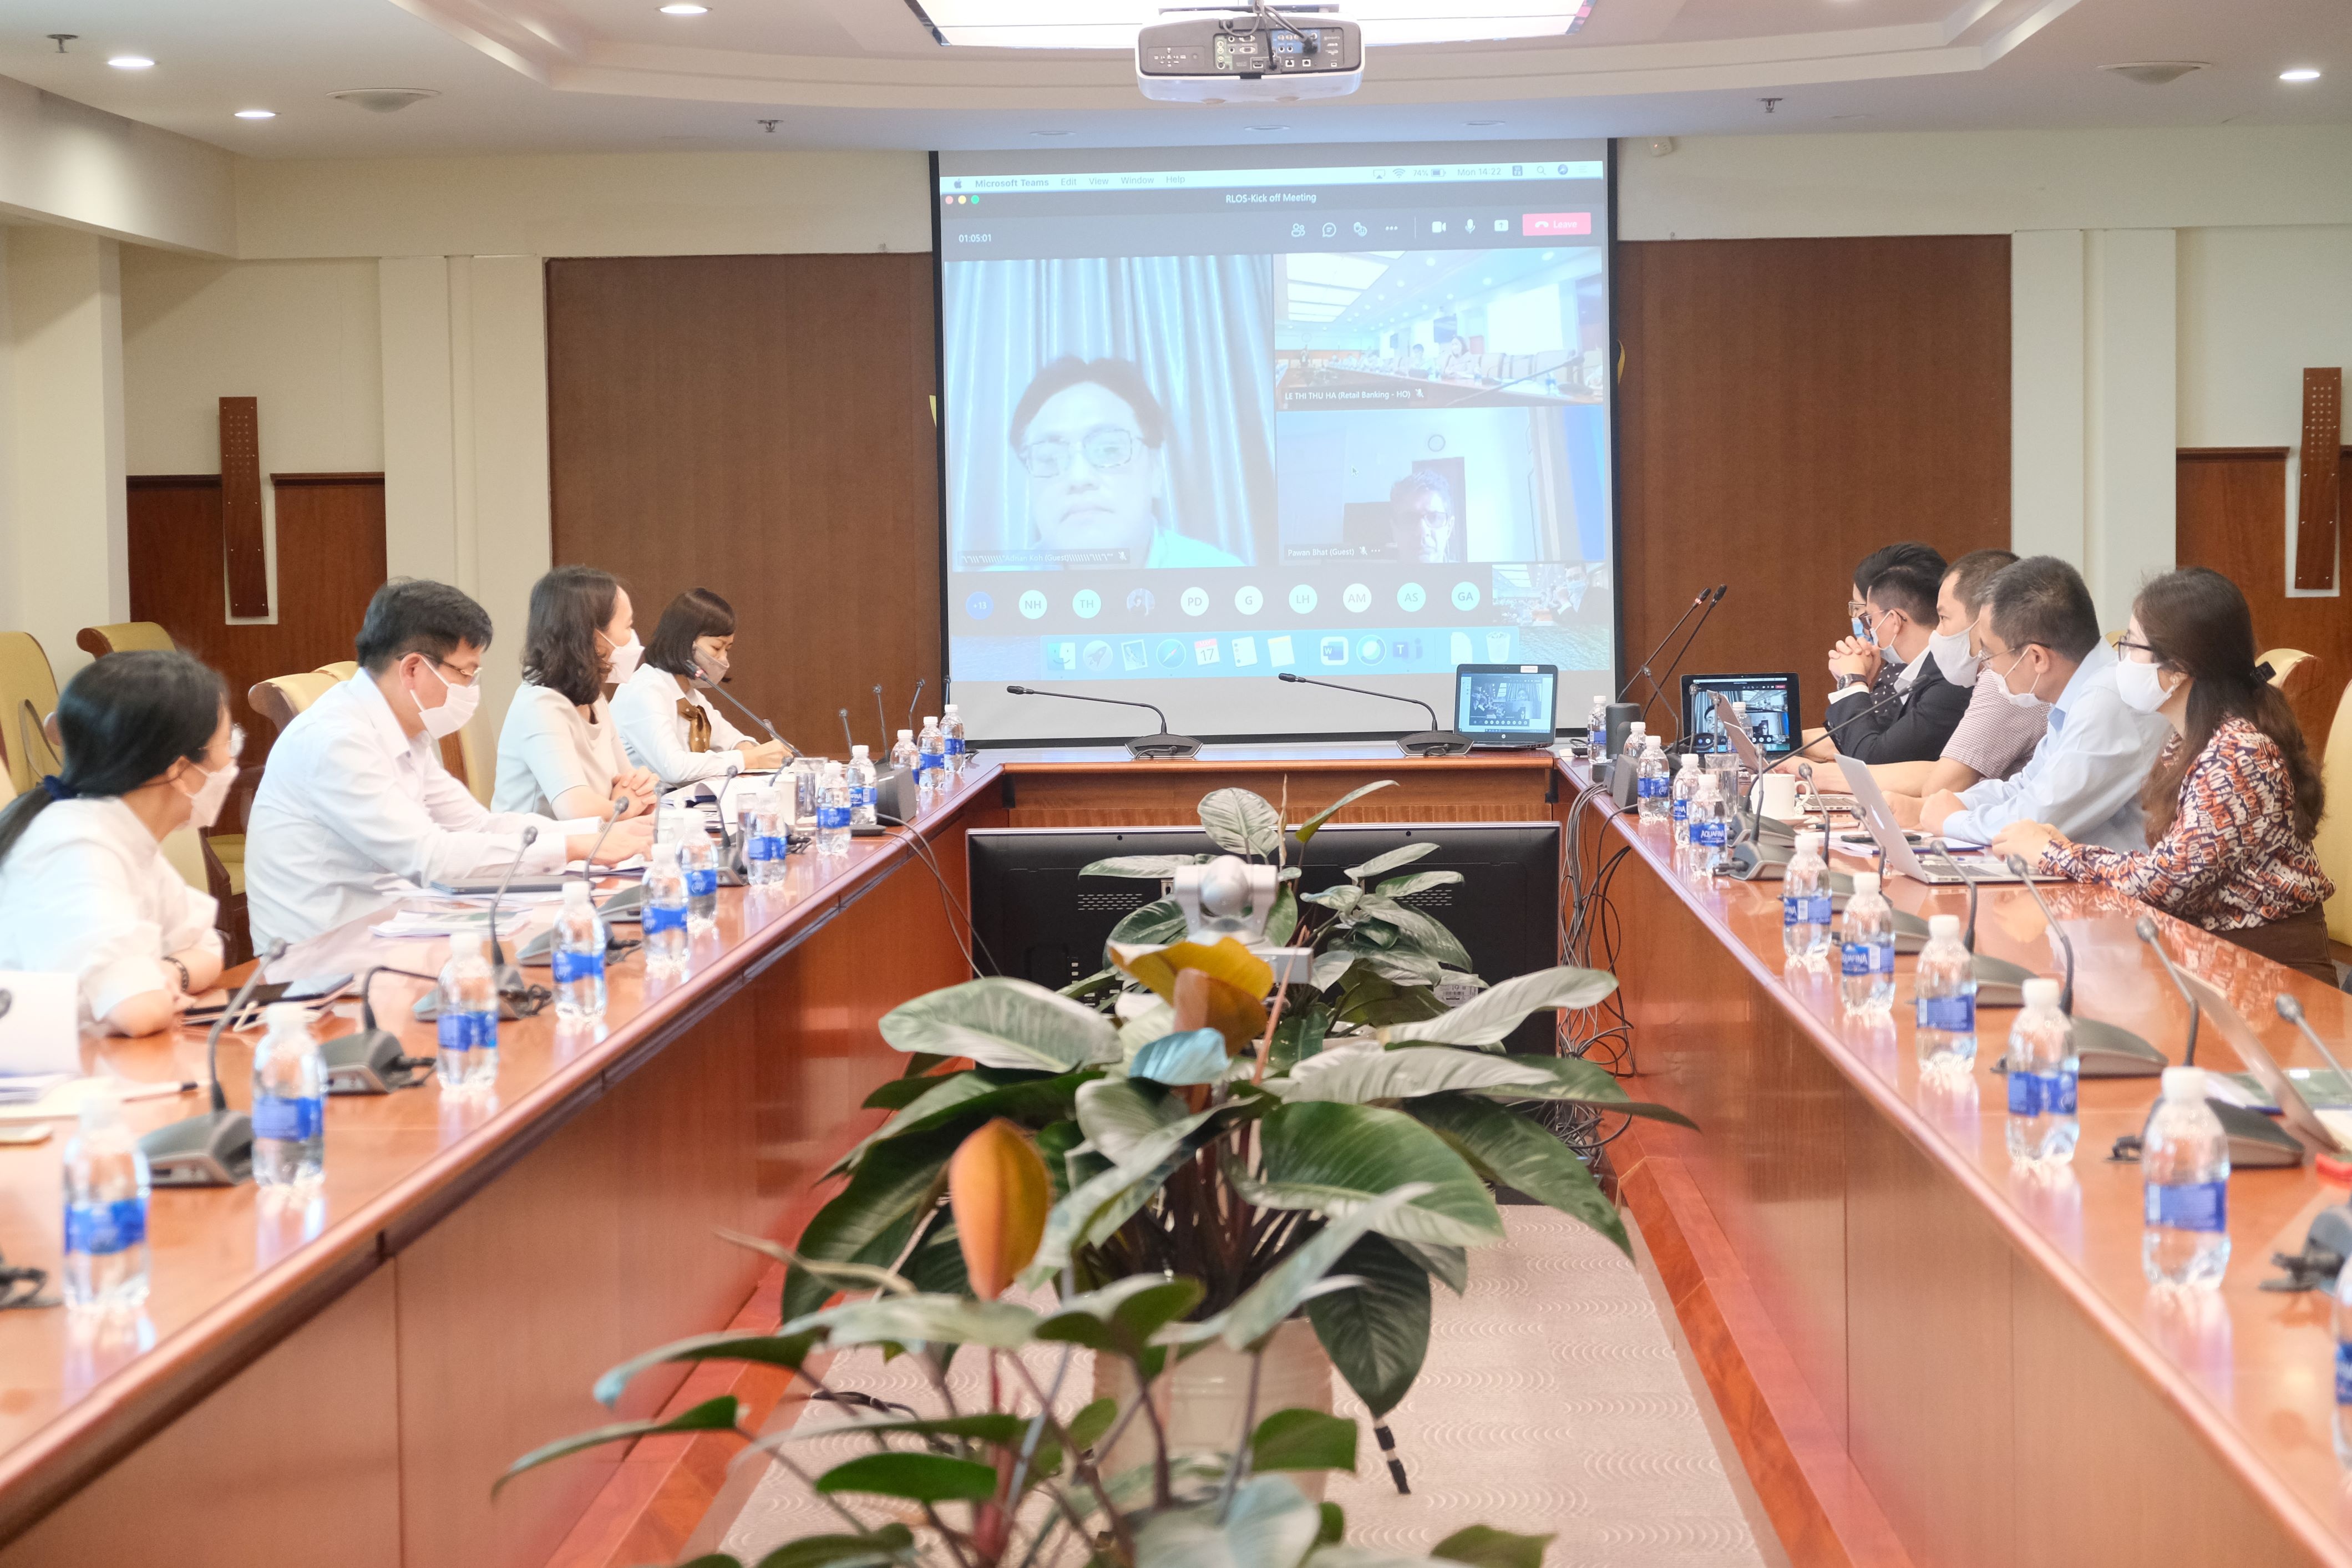 vcb advanced dong hanh cung nguoi kinh doanh online